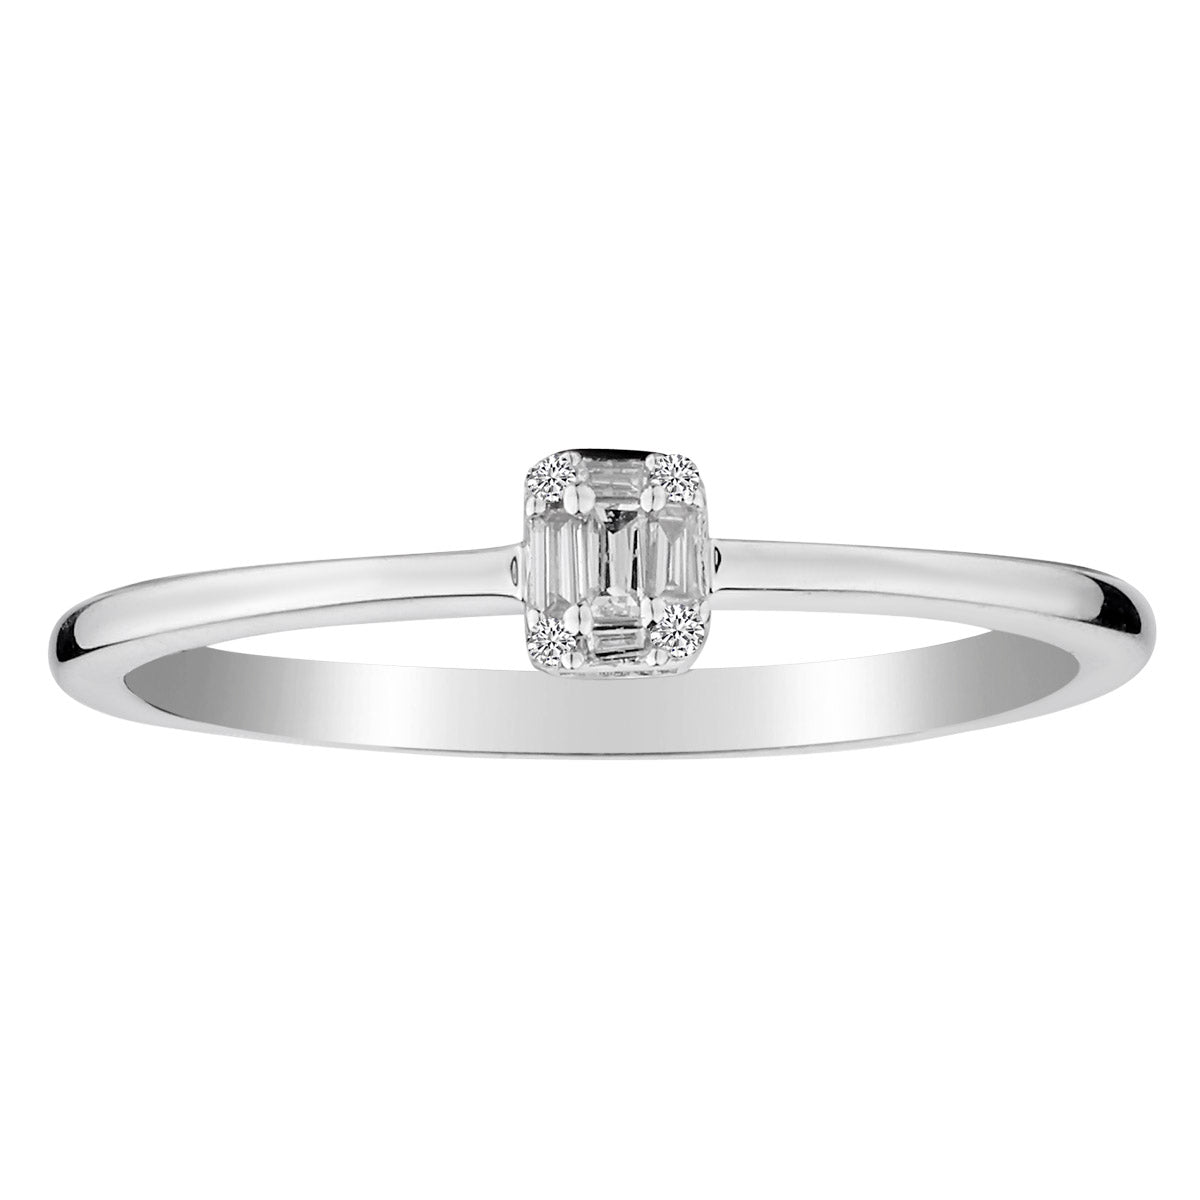 .06 Carat of Diamonds Emerald Shape Ring, 10kt White Gold......................NOW